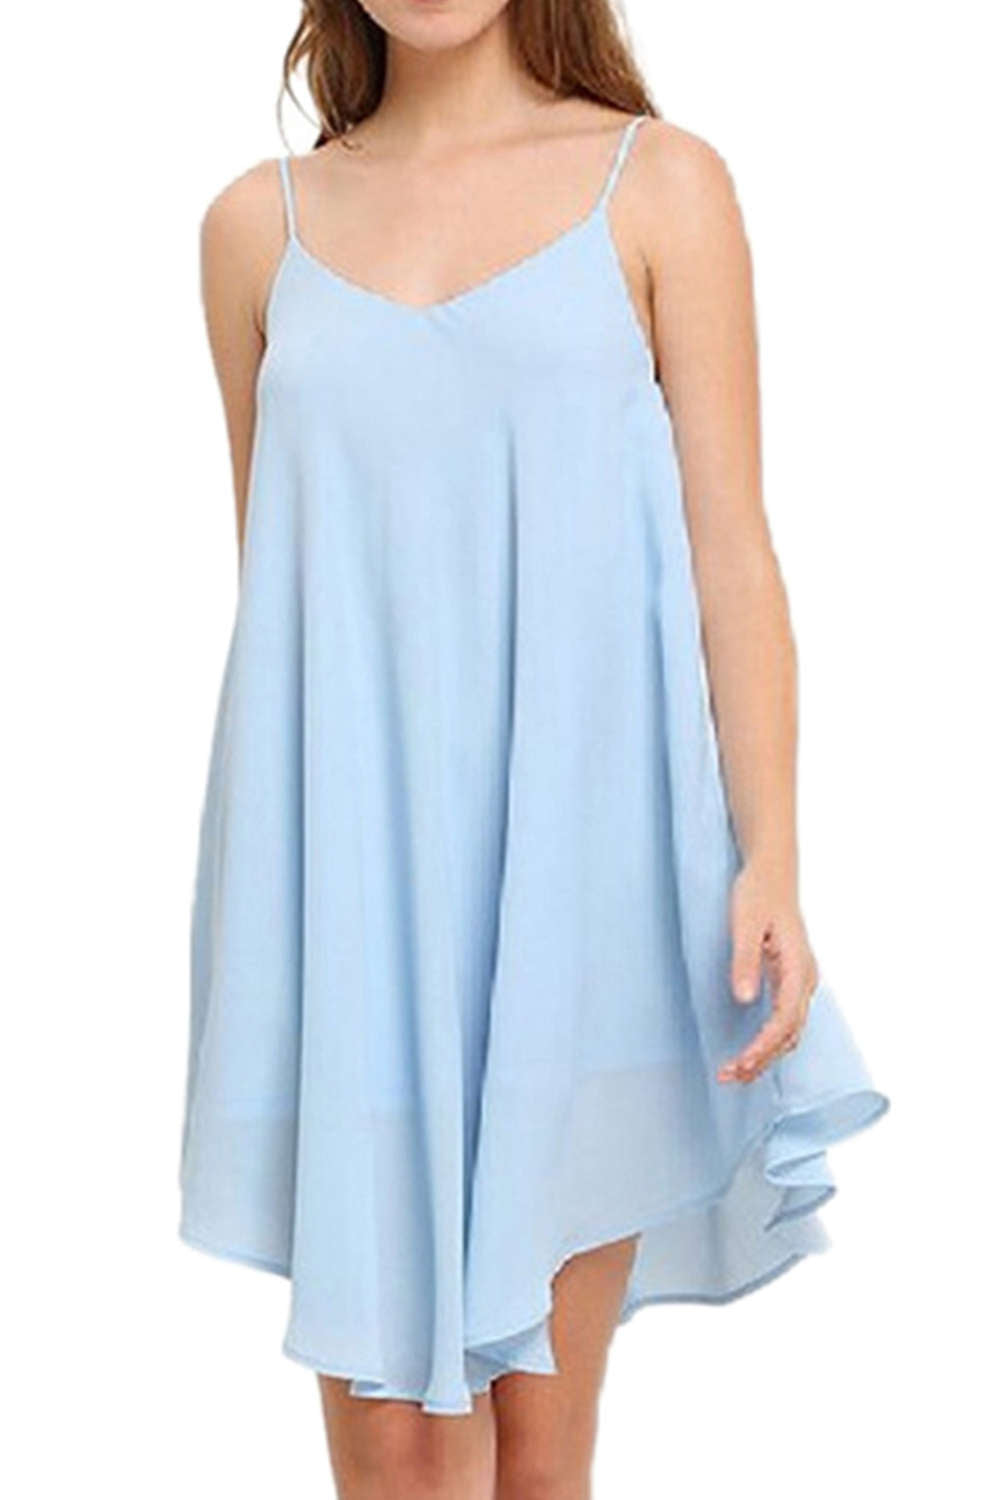 Iyasson Women Solid Color Sleeveless Short Dress